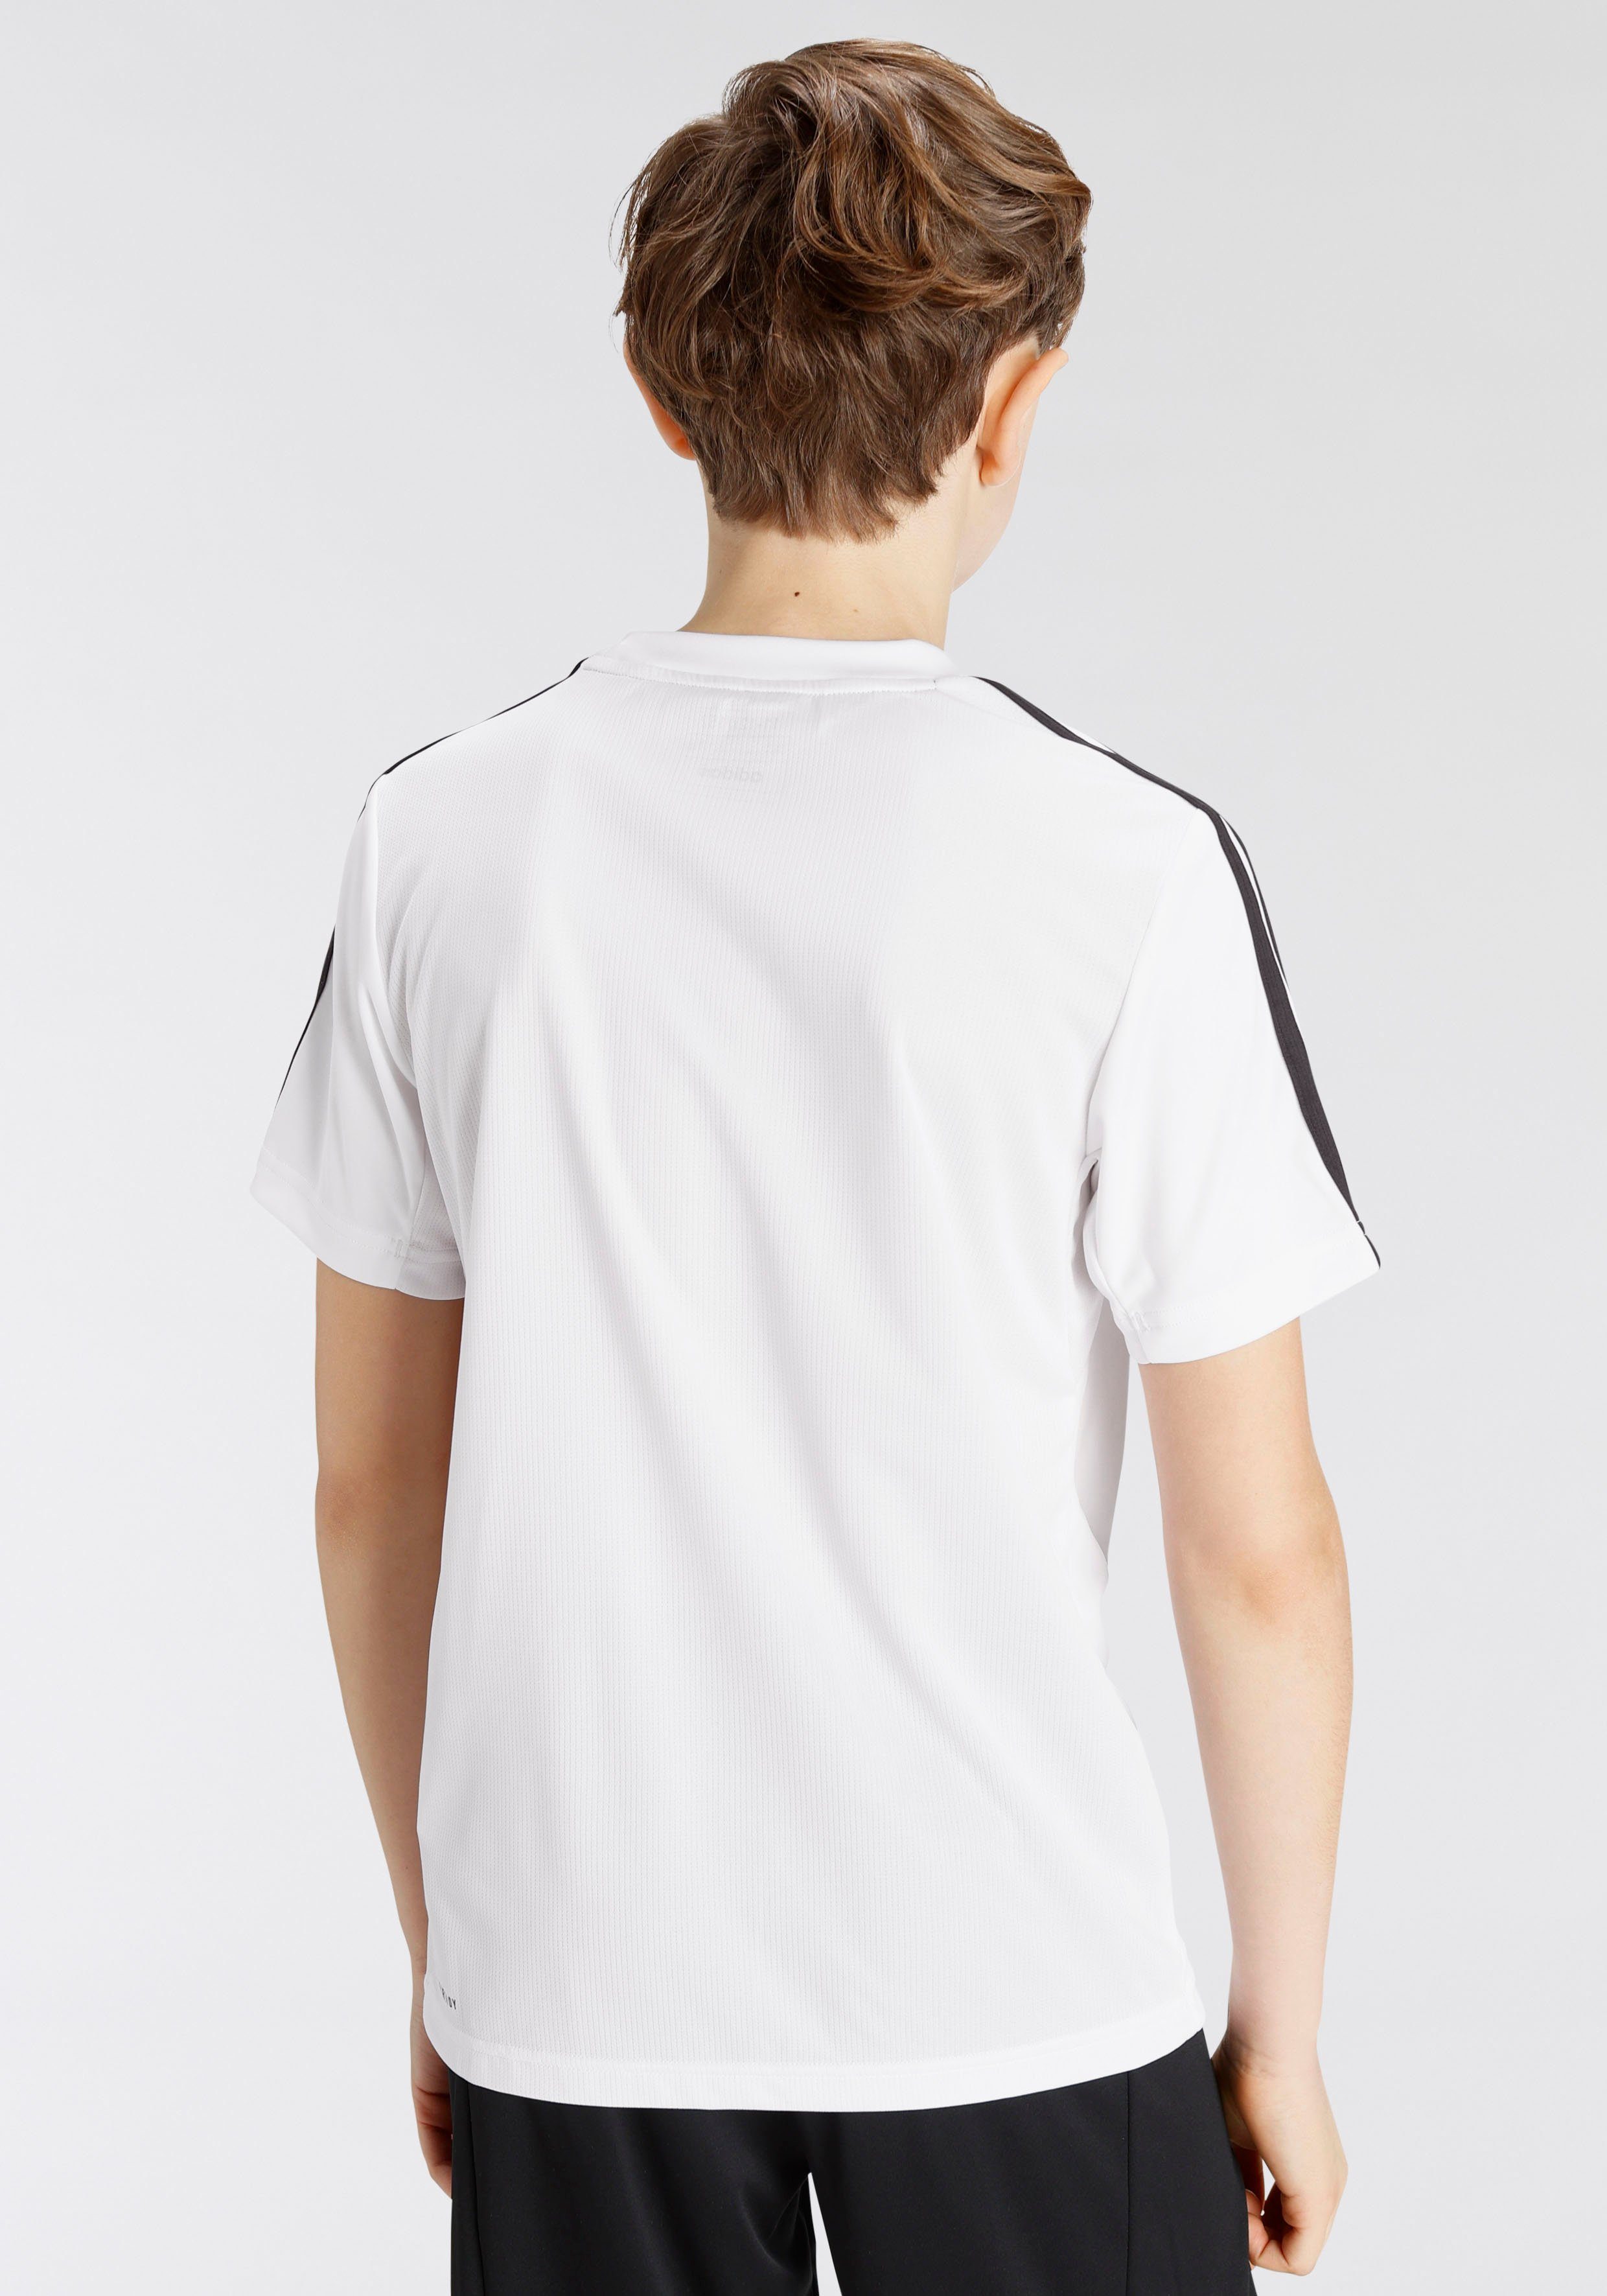 AEROREADY Black REGULAR-FIT adidas TRAIN / 3-STREIFEN ESSENTIALS White Sportswear T-Shirt